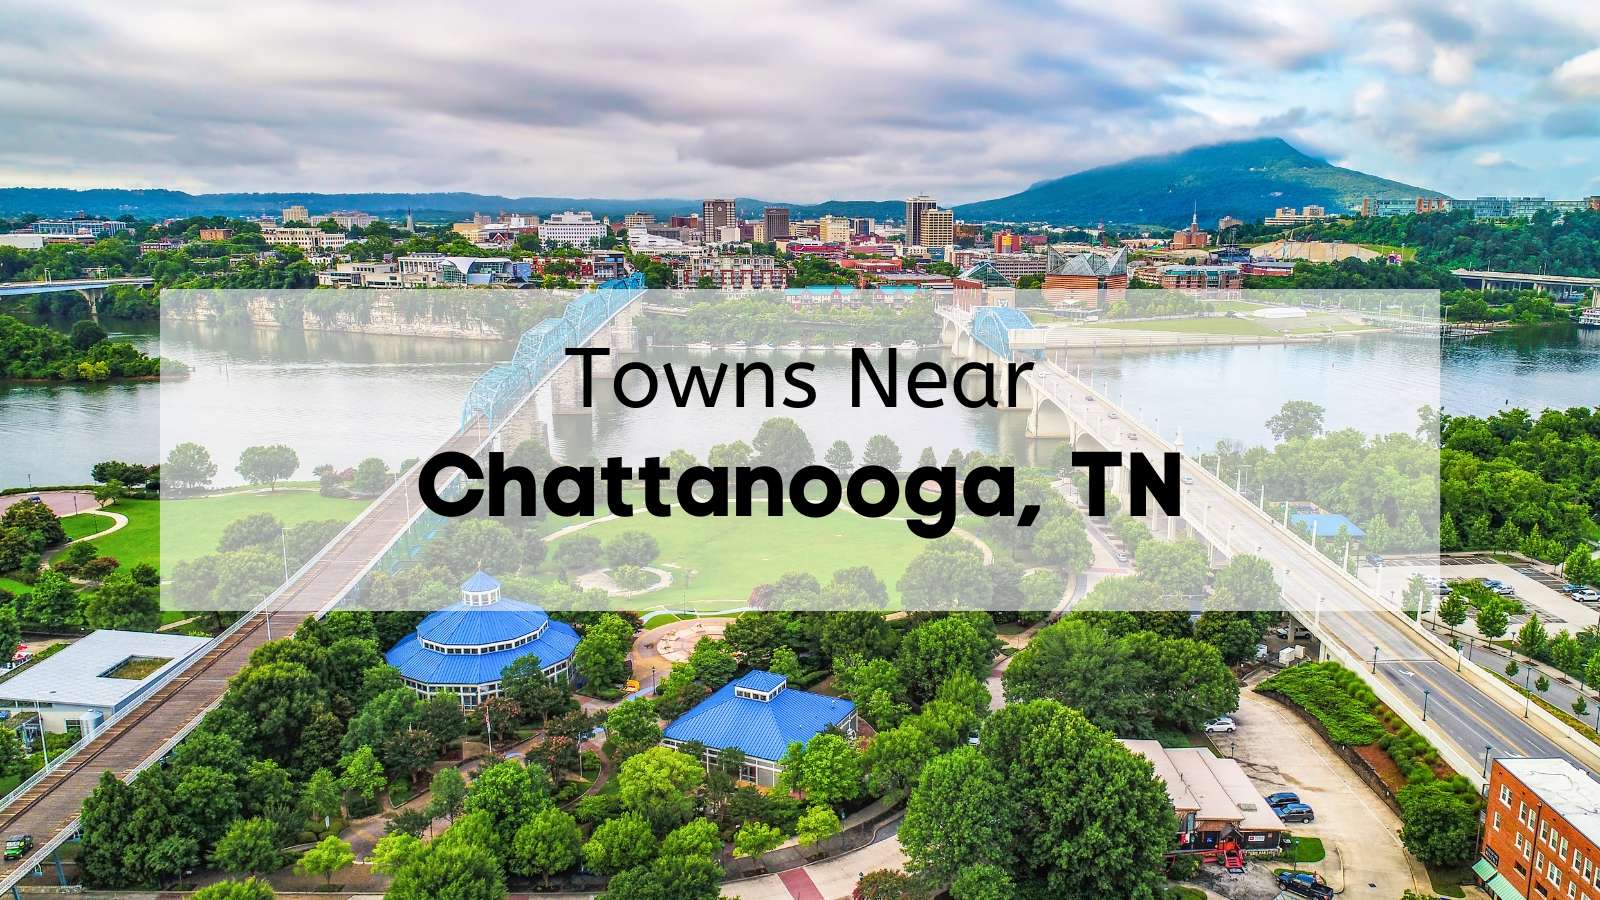 Towns Near Chattanooga, TN